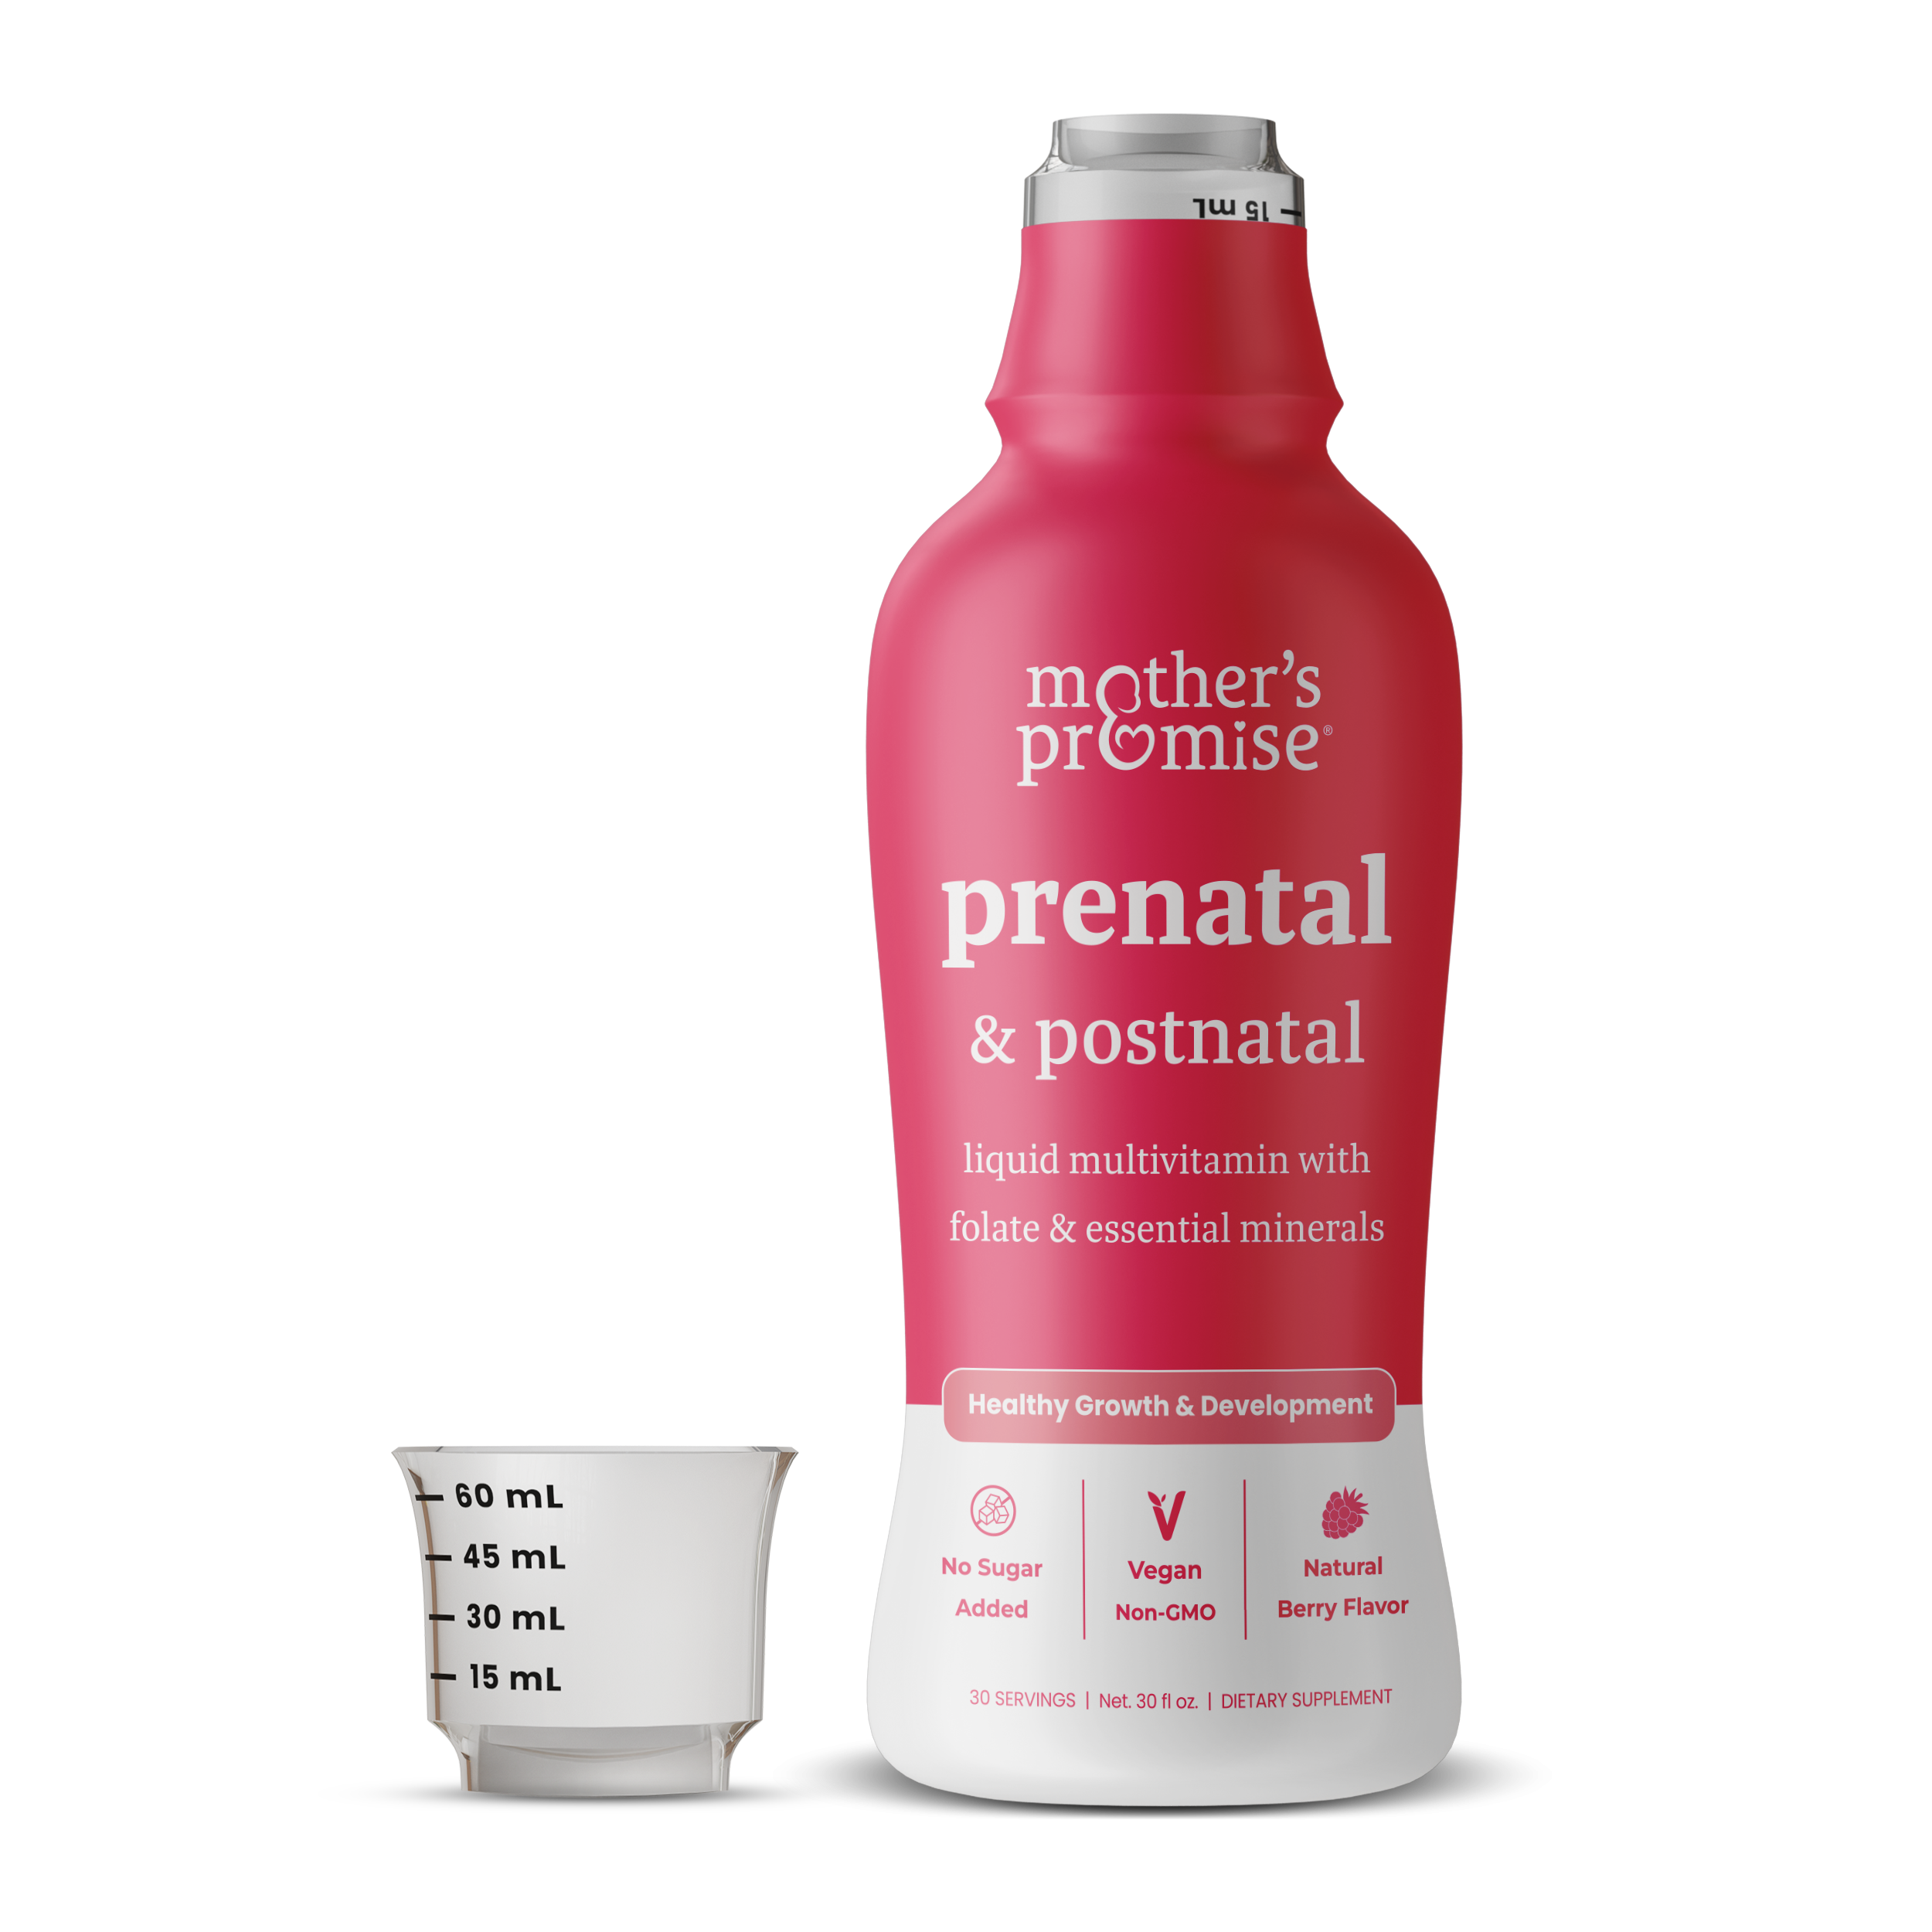 Mother's Promise Prenatal & Postnatal Multivitamin for Women | Sugar Free Liquid Prenatal Vitamins for Women with Folate, Choline & Organic Fruits for Preconception, Pregnancy & Nursing | Vegan & Non-GMO